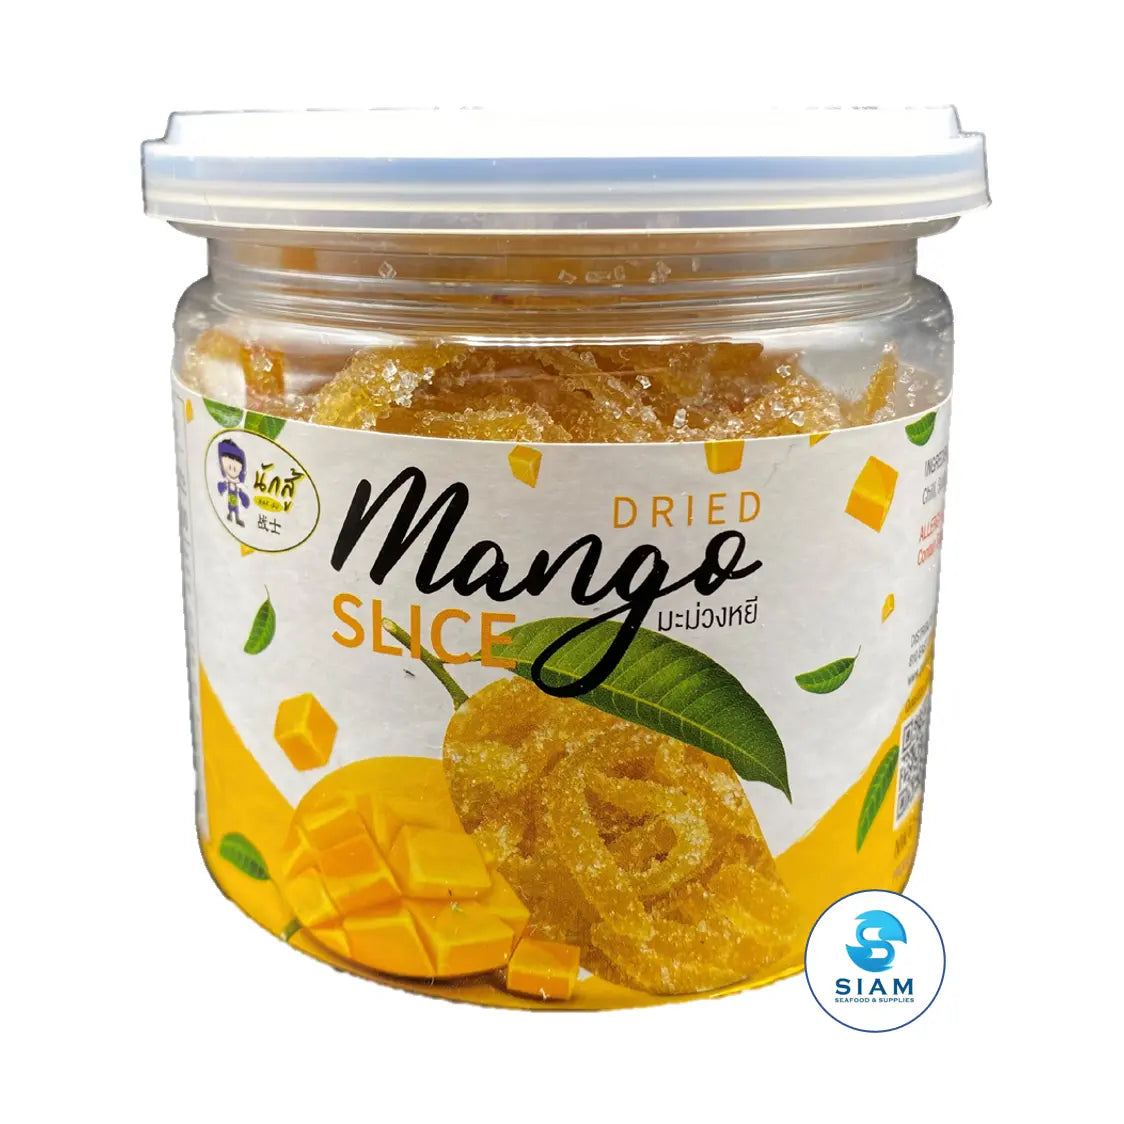 Dried Mango Slice - Nak Su (6.5 oz-Net Wt 8.1 oz) มะม่วงหยี ตรานักสู้่ shippable Nak Su